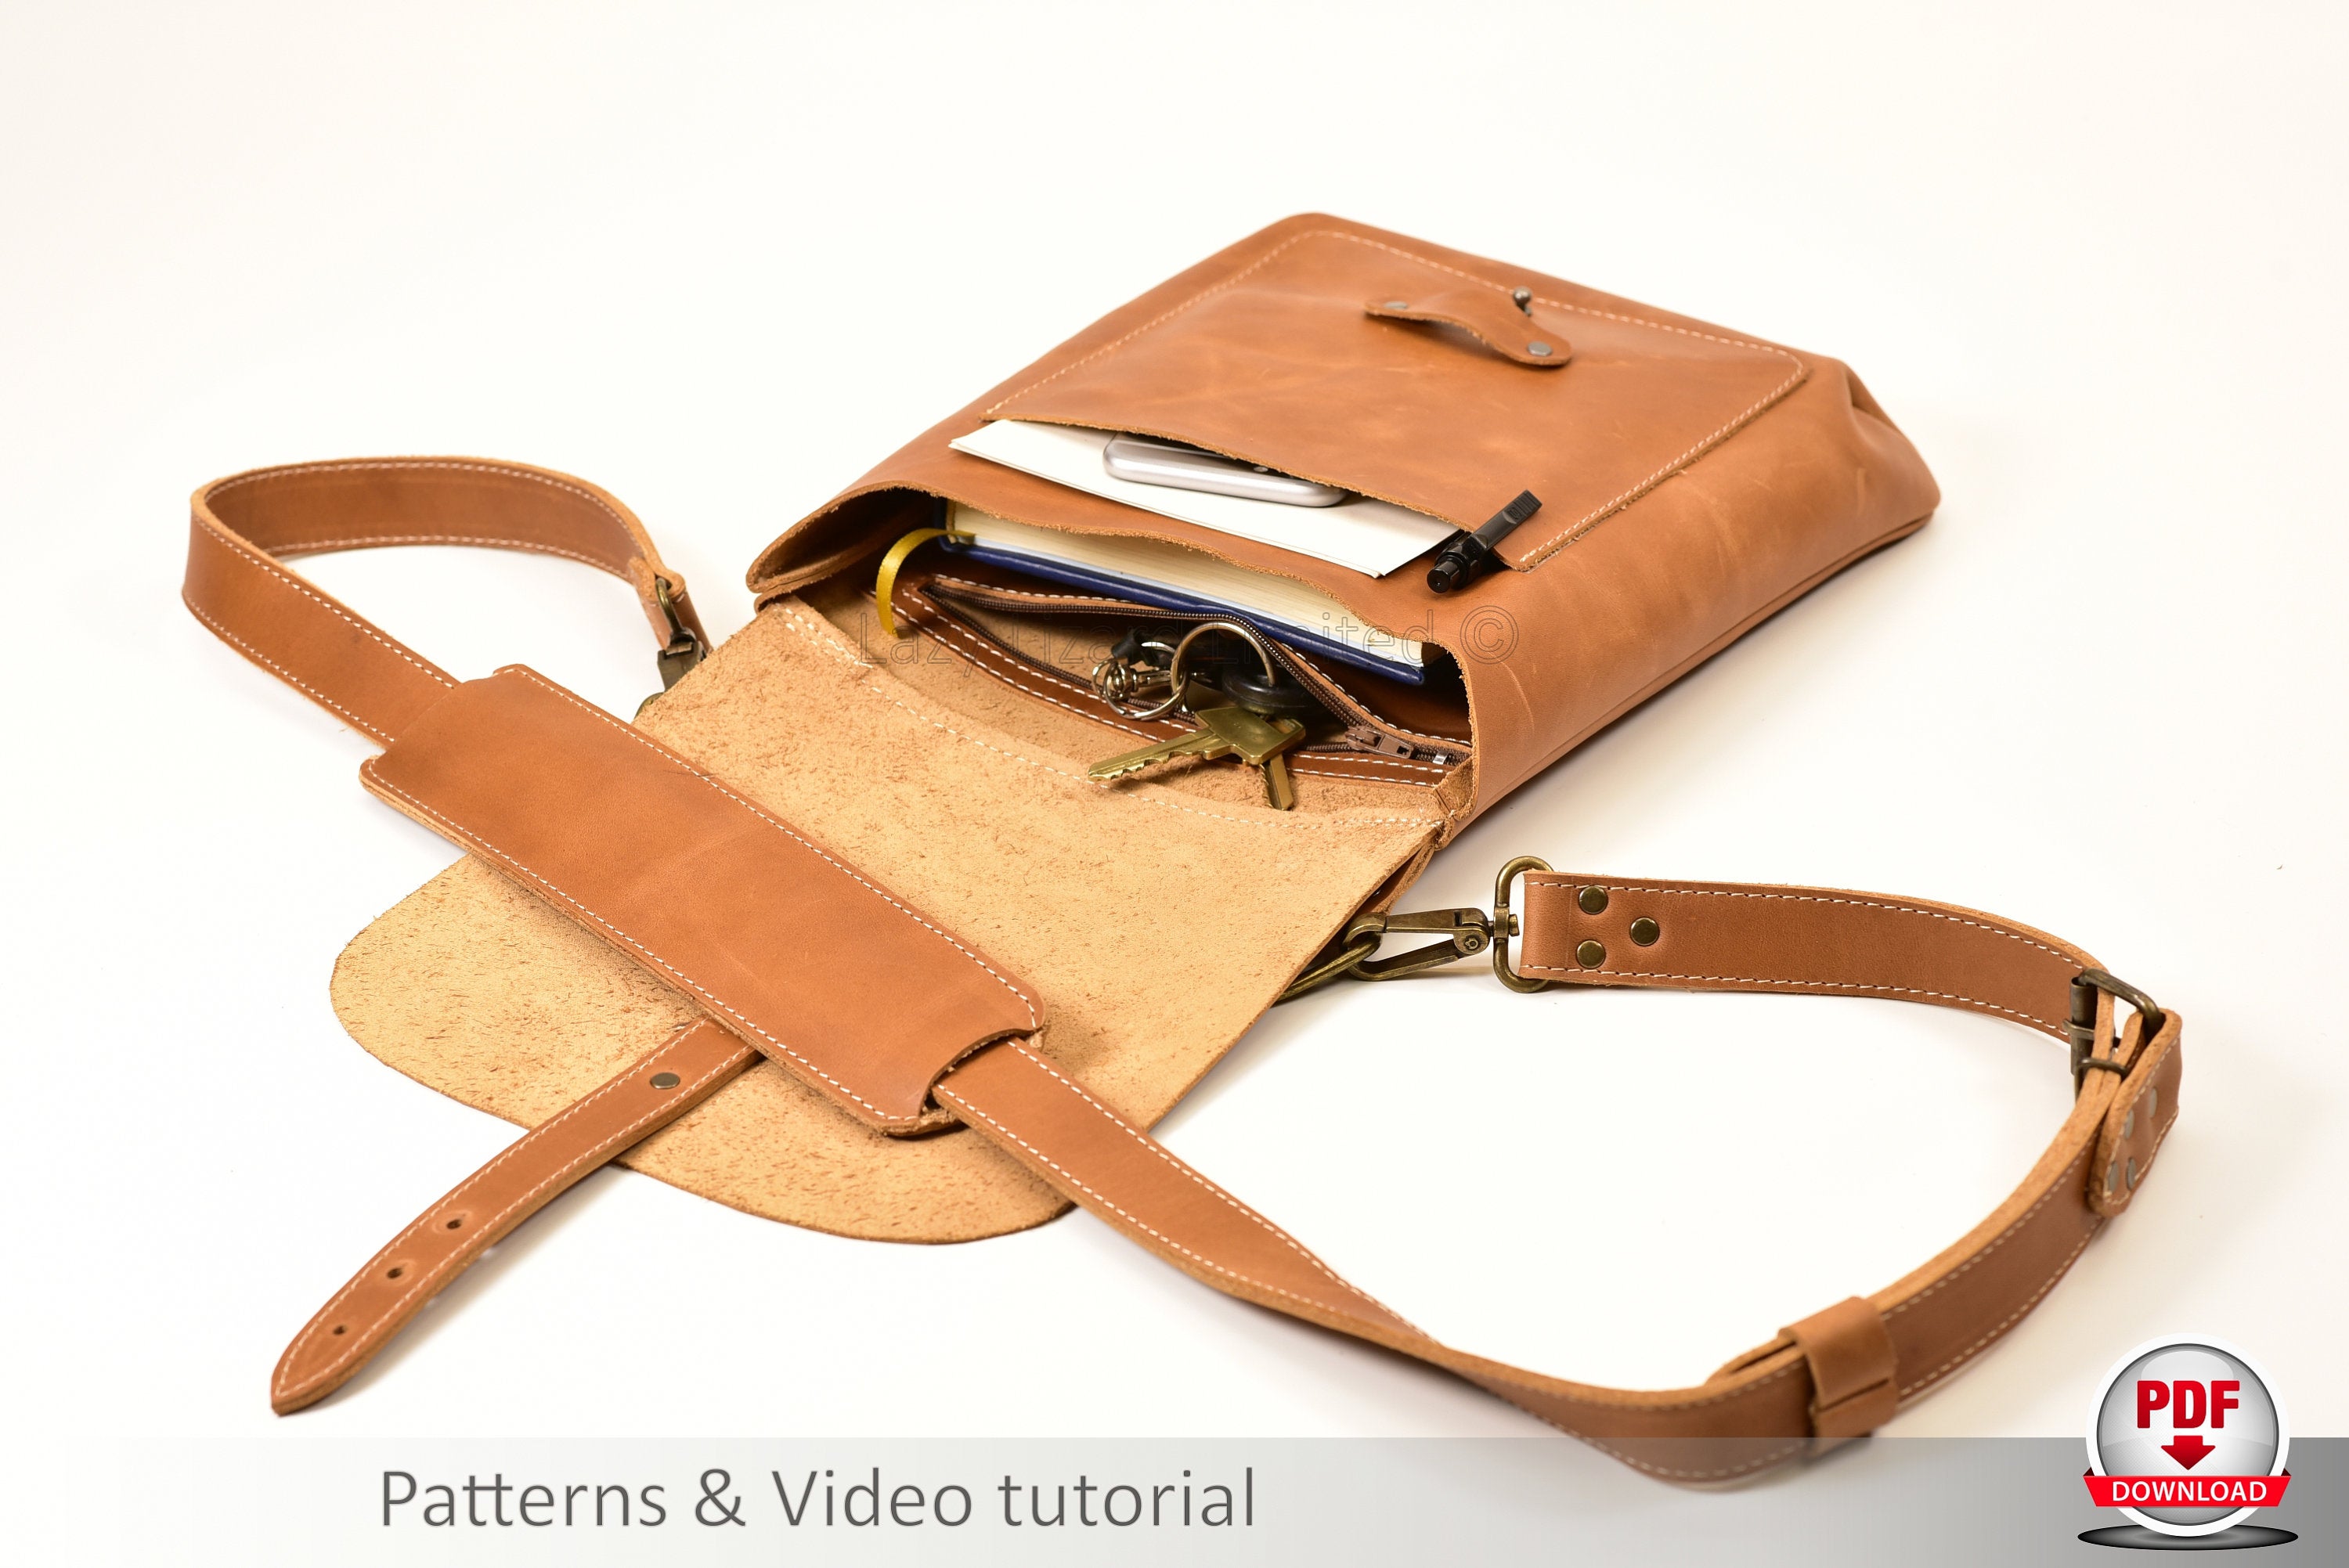 Cross Body Leather Bag 3.3 – Digital PDF Patterns